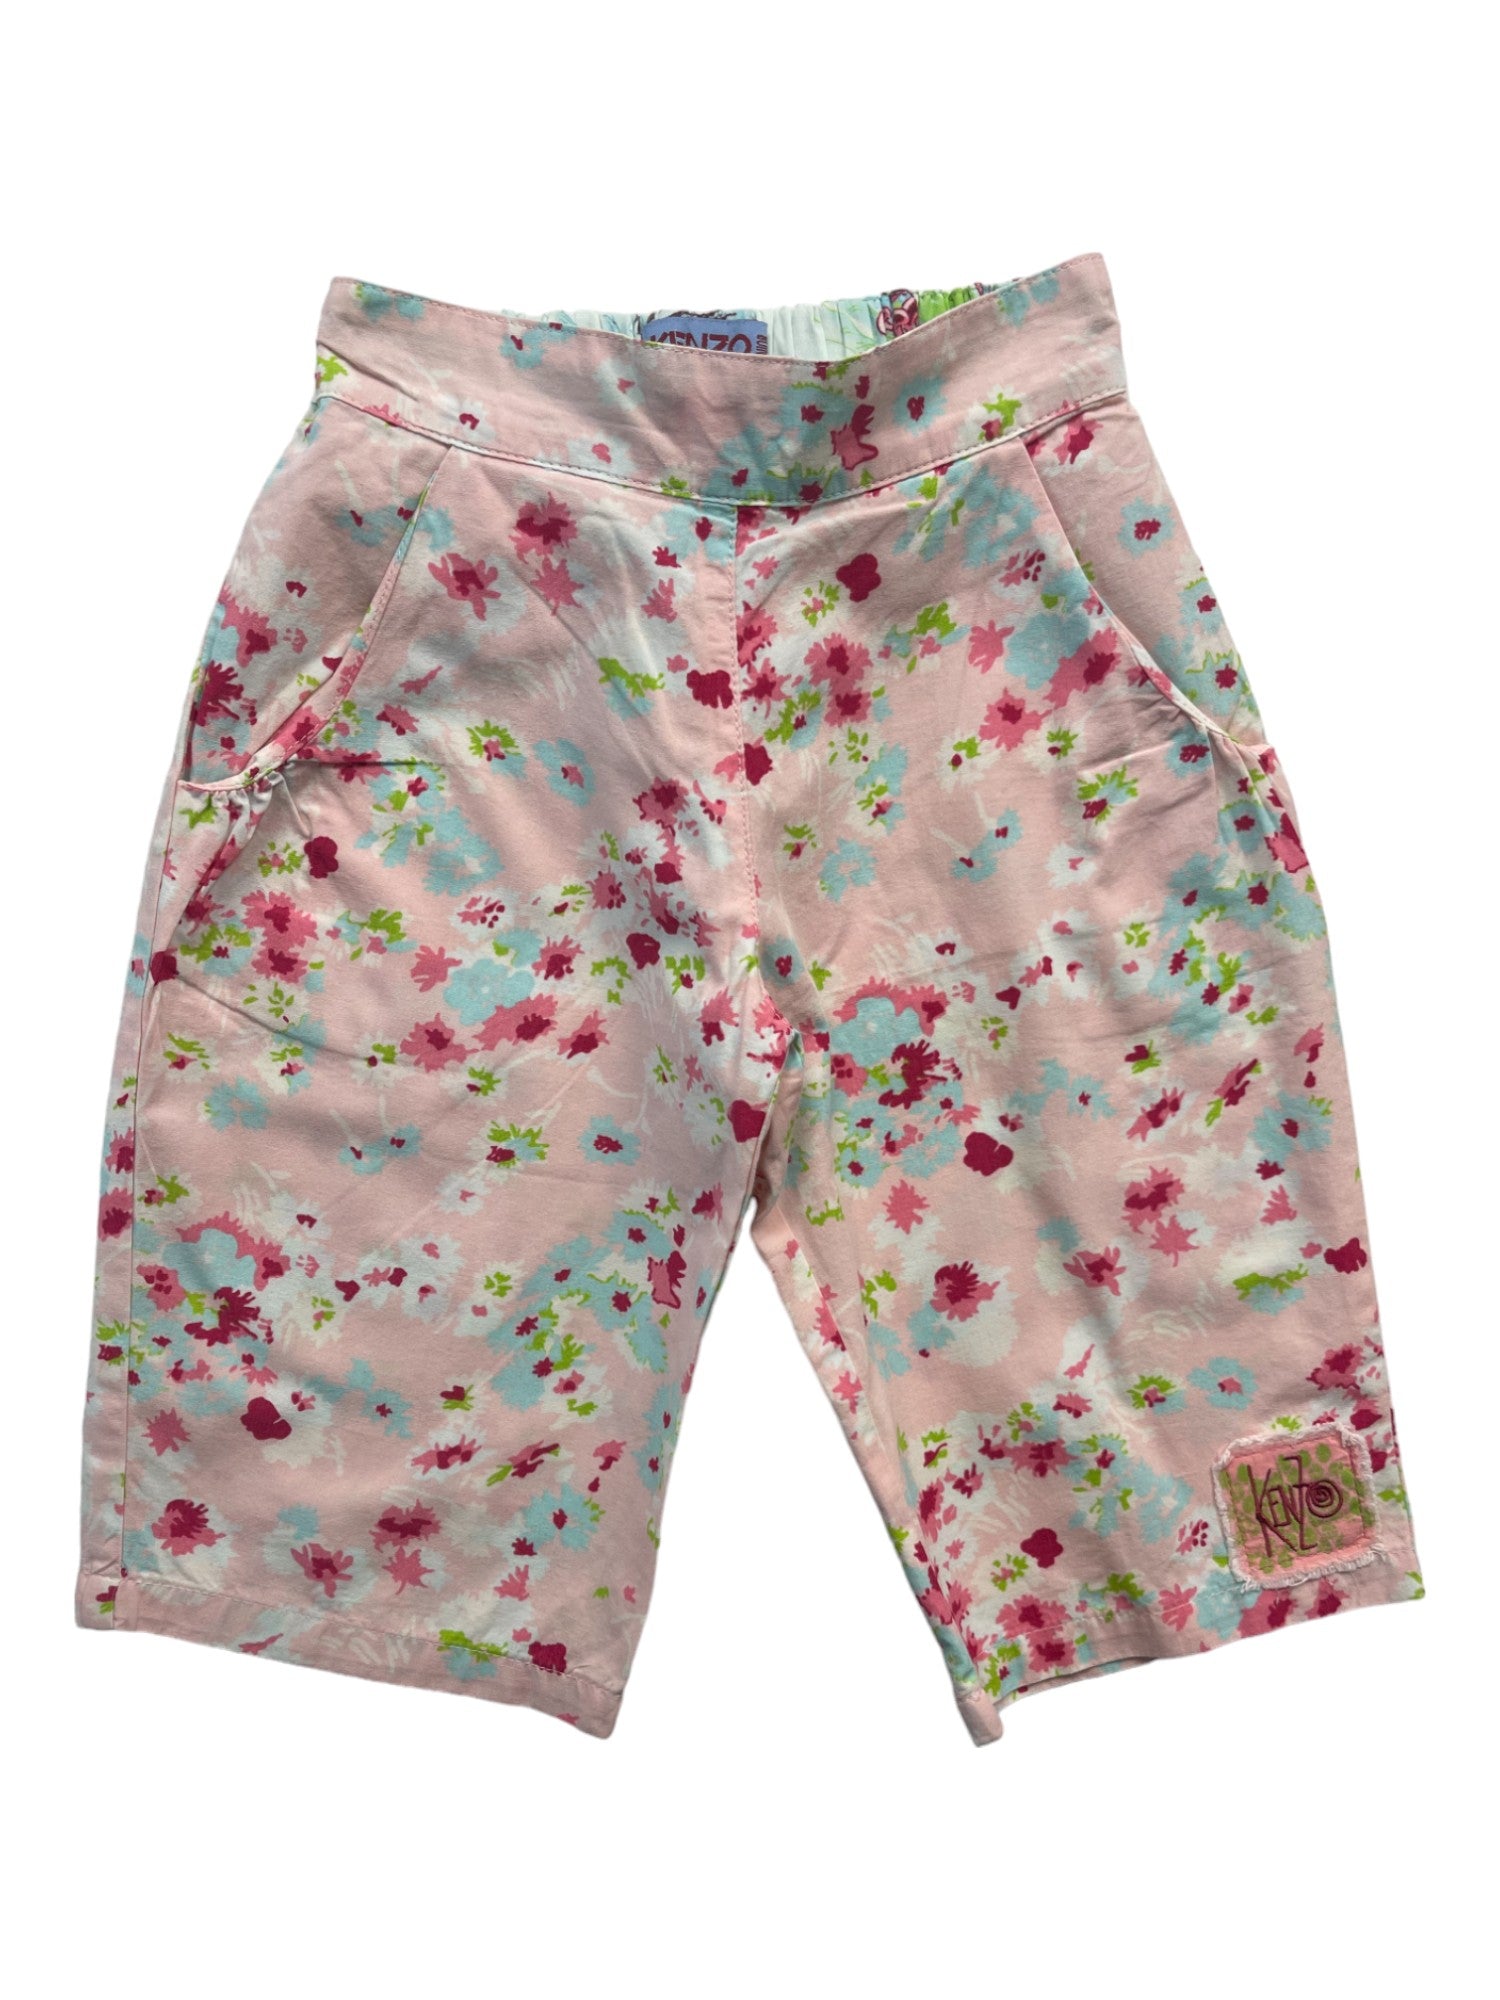 KENZO - Pantalon droit rose à fleurs - 2 ans